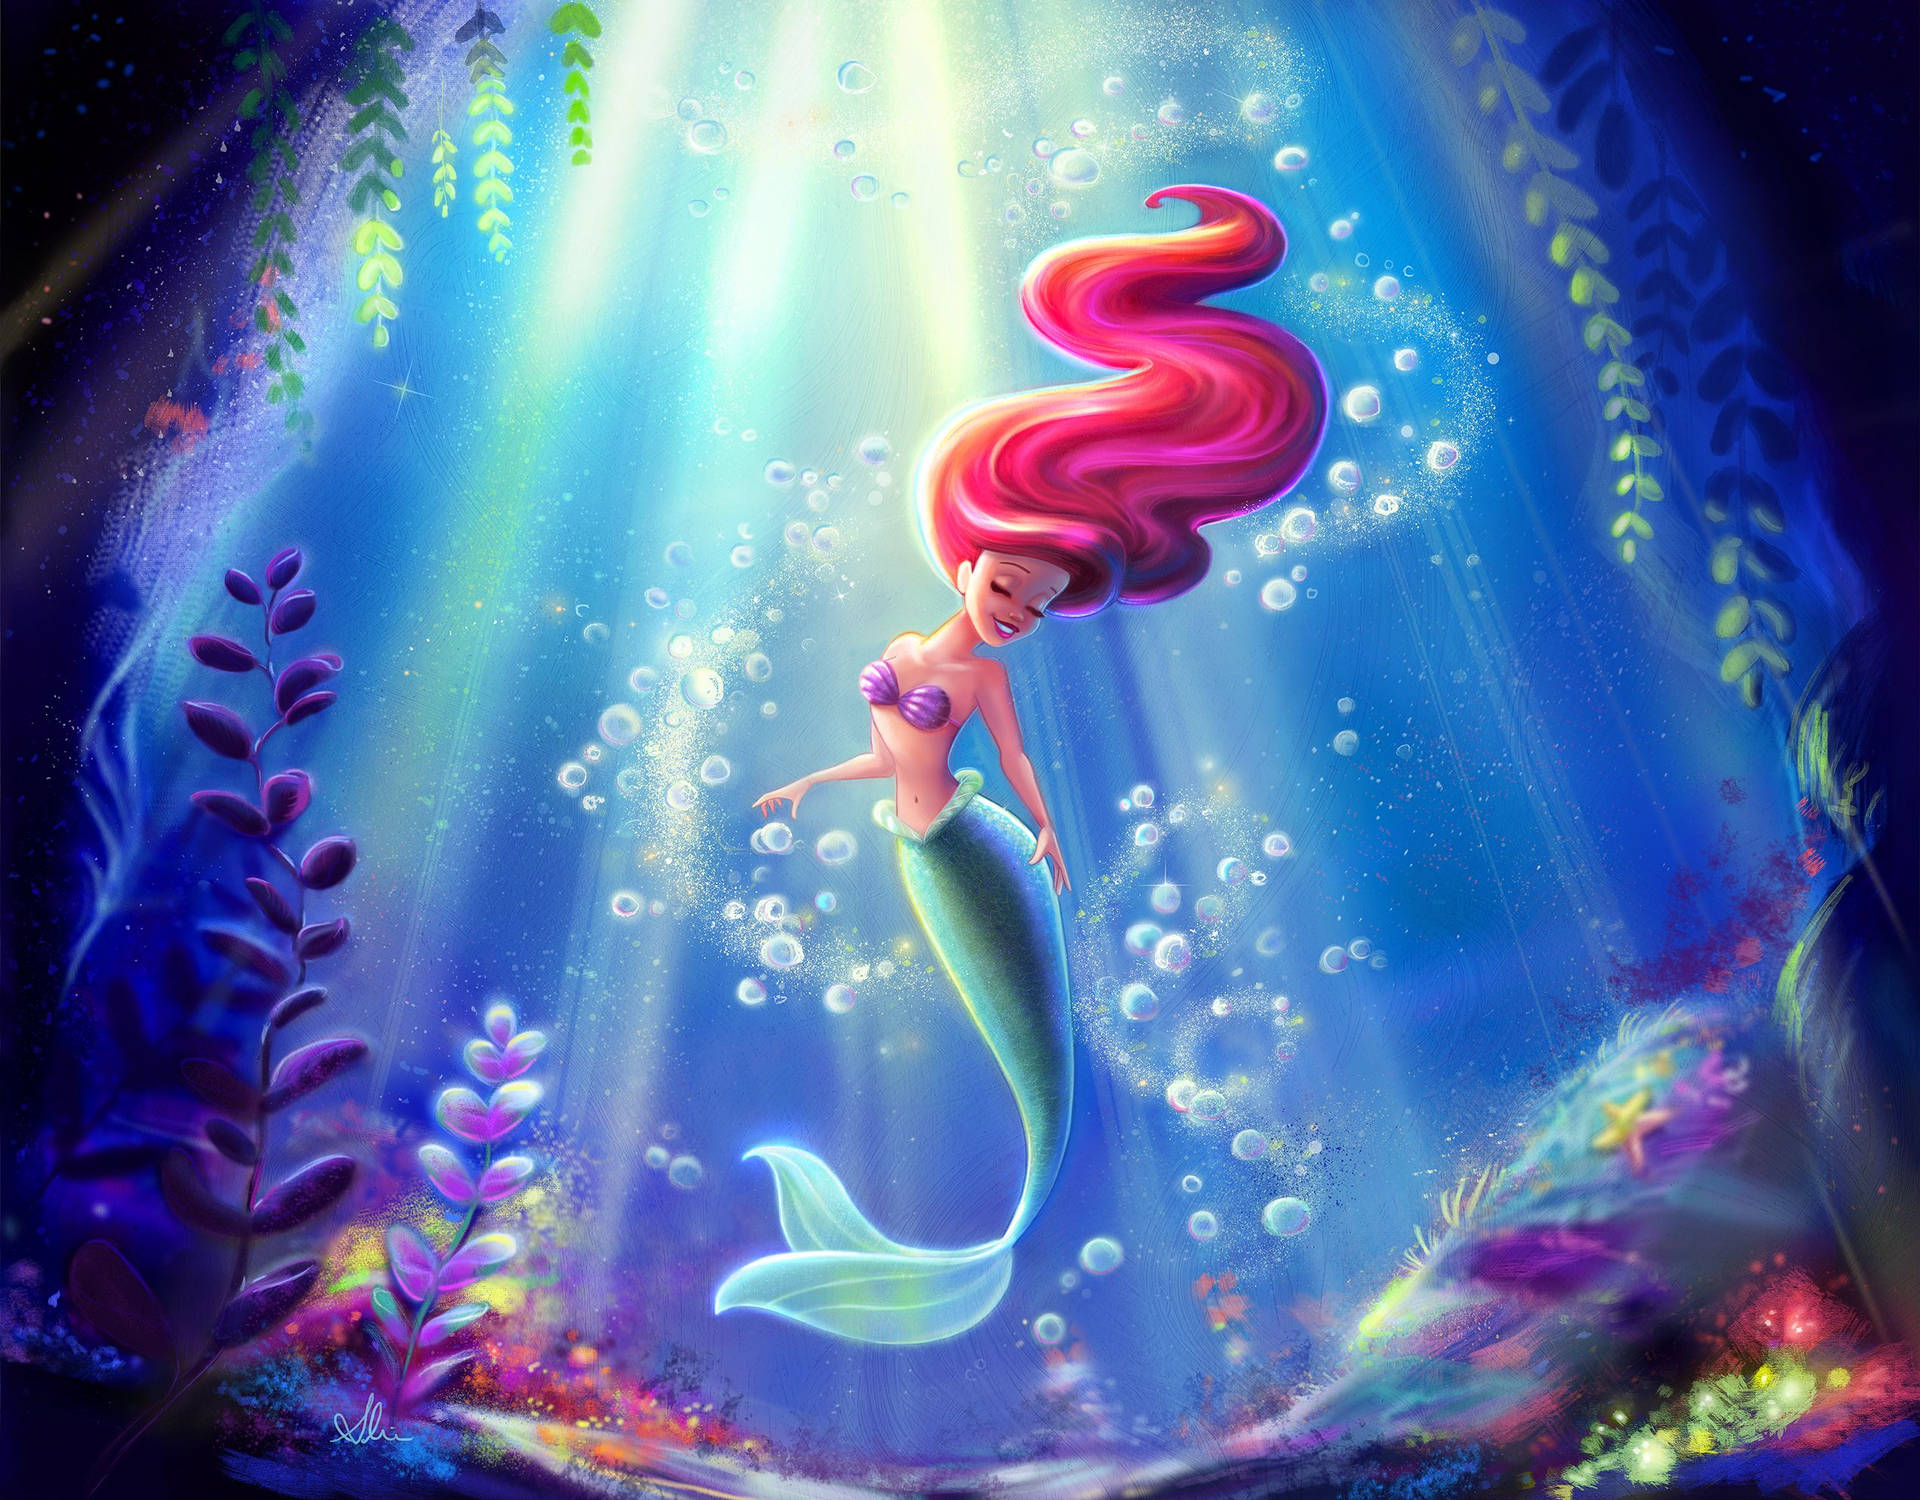 Ariel, The Little Mermaid, dances under the sea Wallpaper